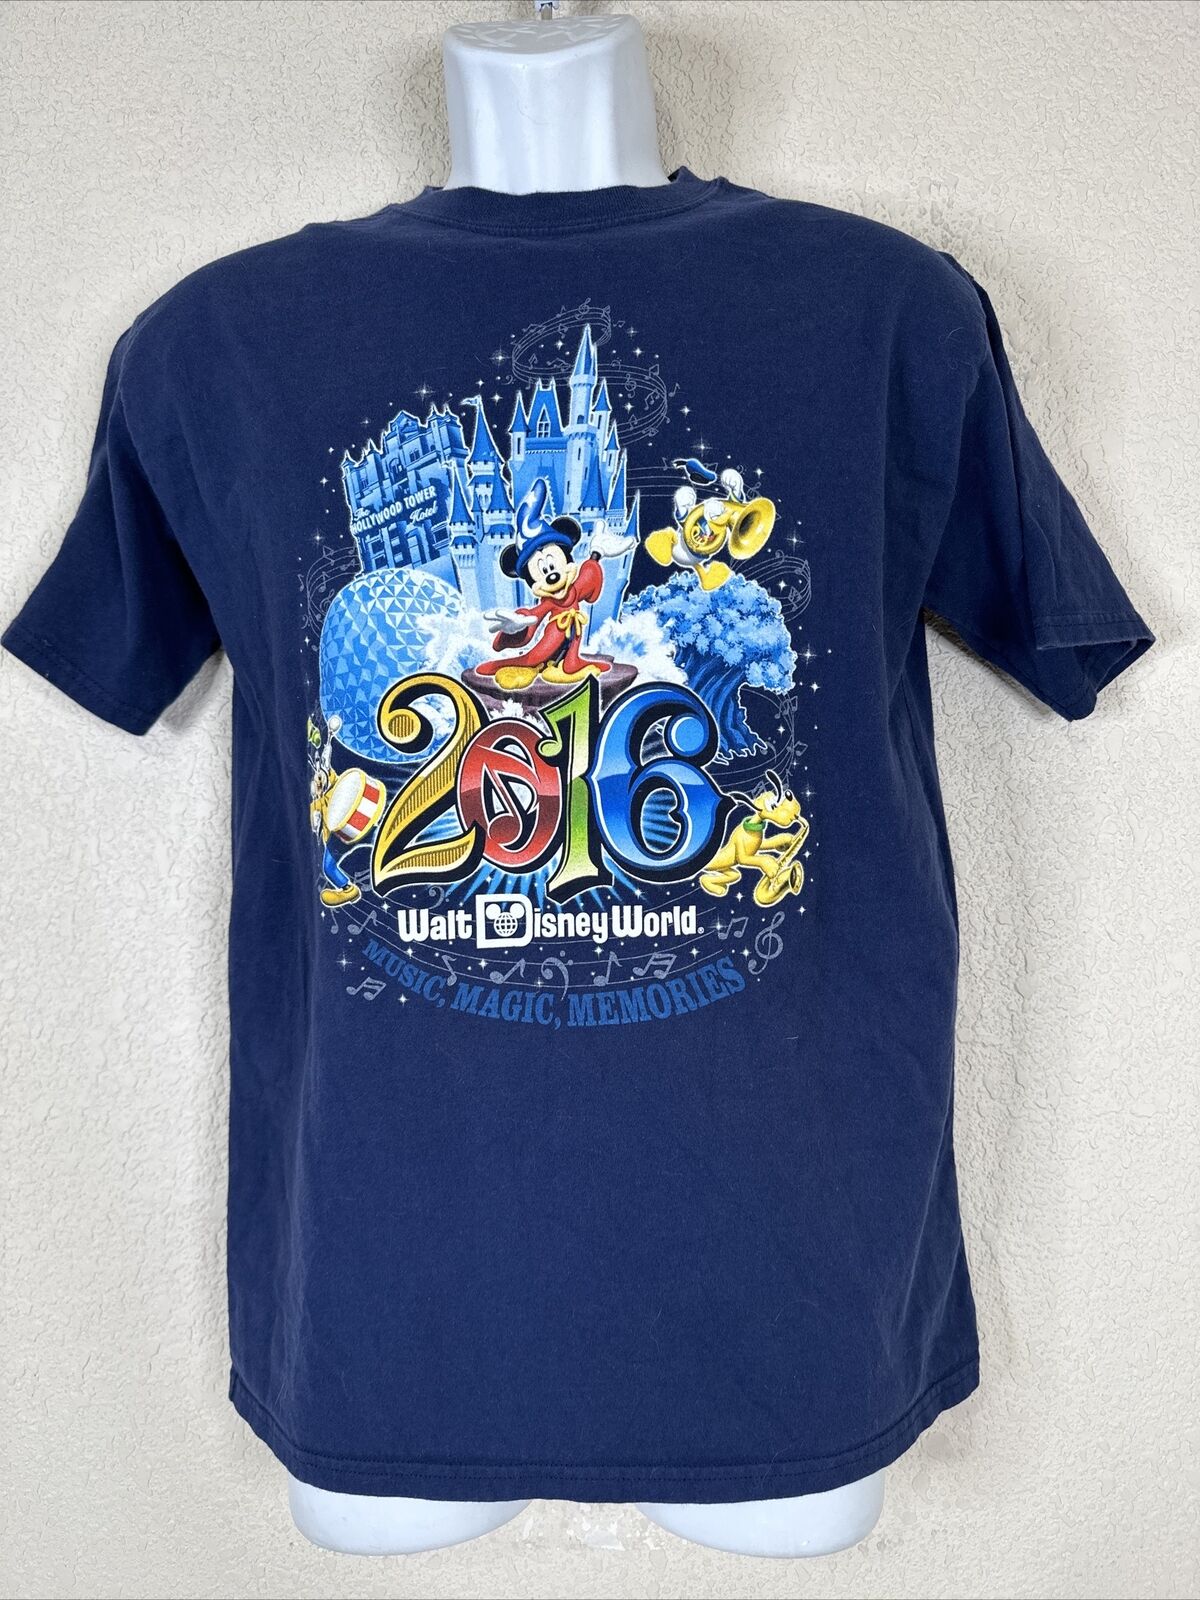 Disney Parks by Hanes Teen Size XL Dark Blue 2016 Fantasia Mickey T Shirt